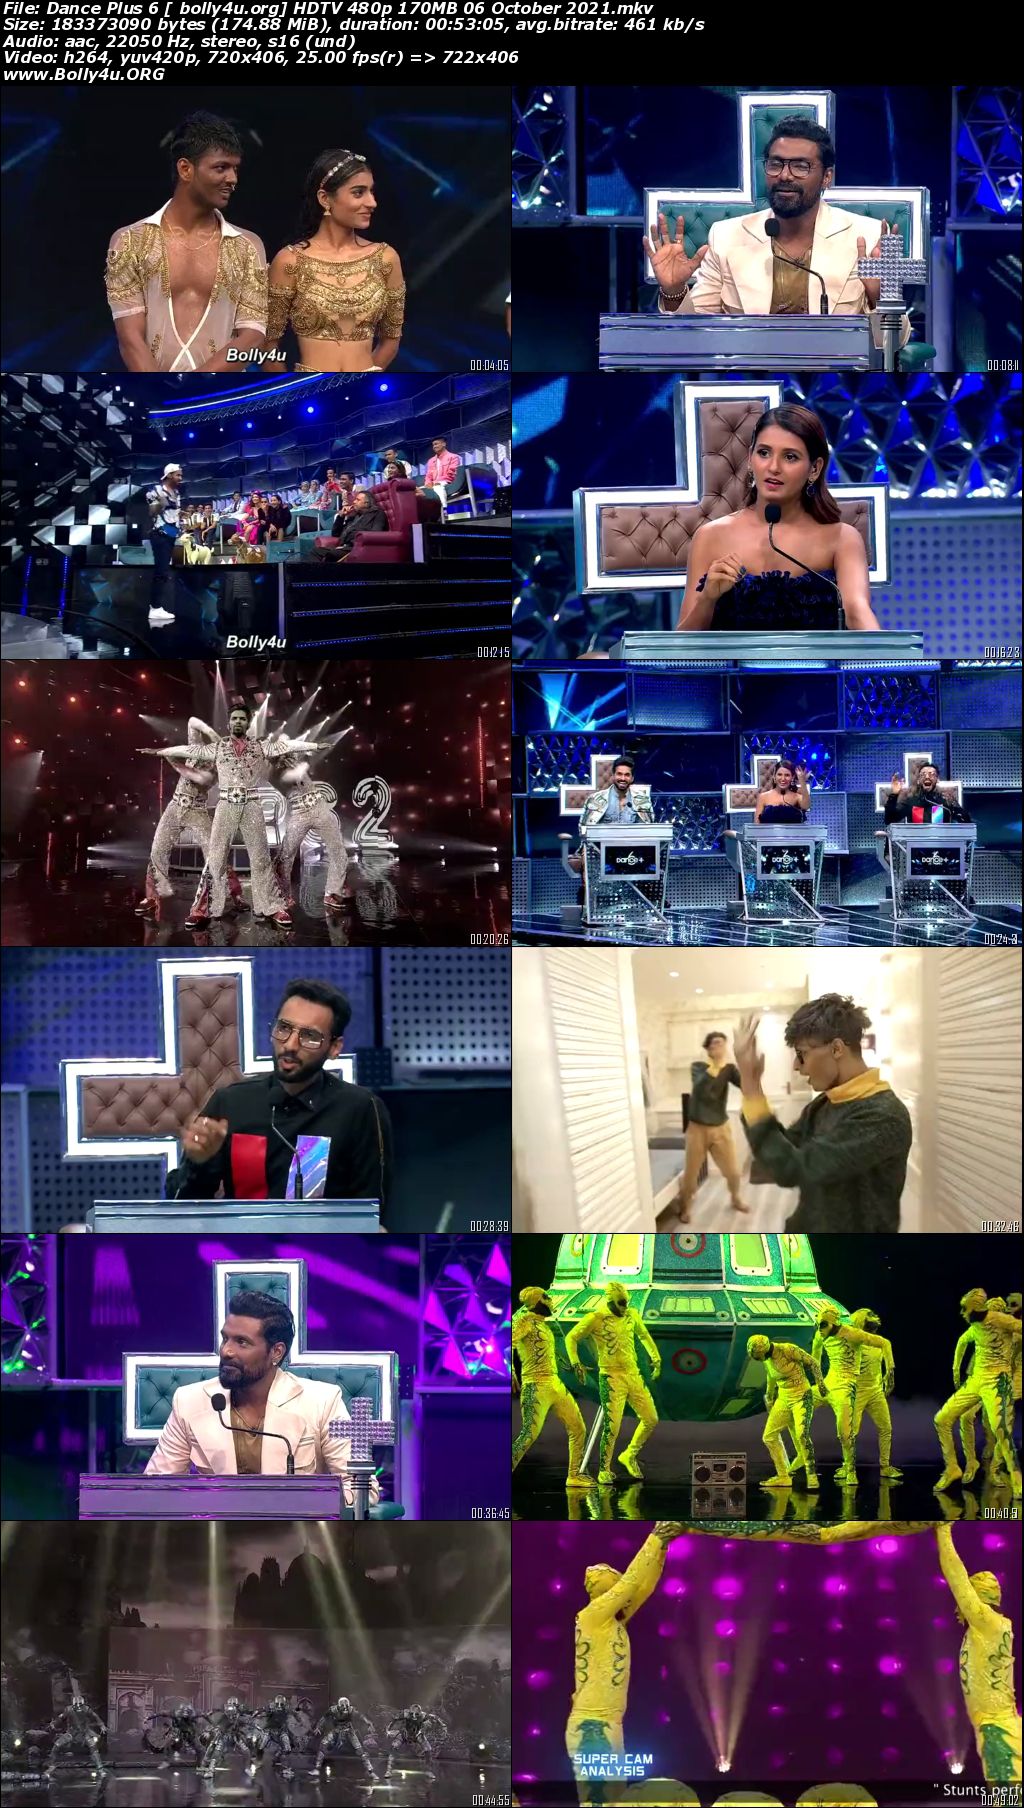 Dance Plus 6 HDTV 480p 170MB 06 October 2021 Download